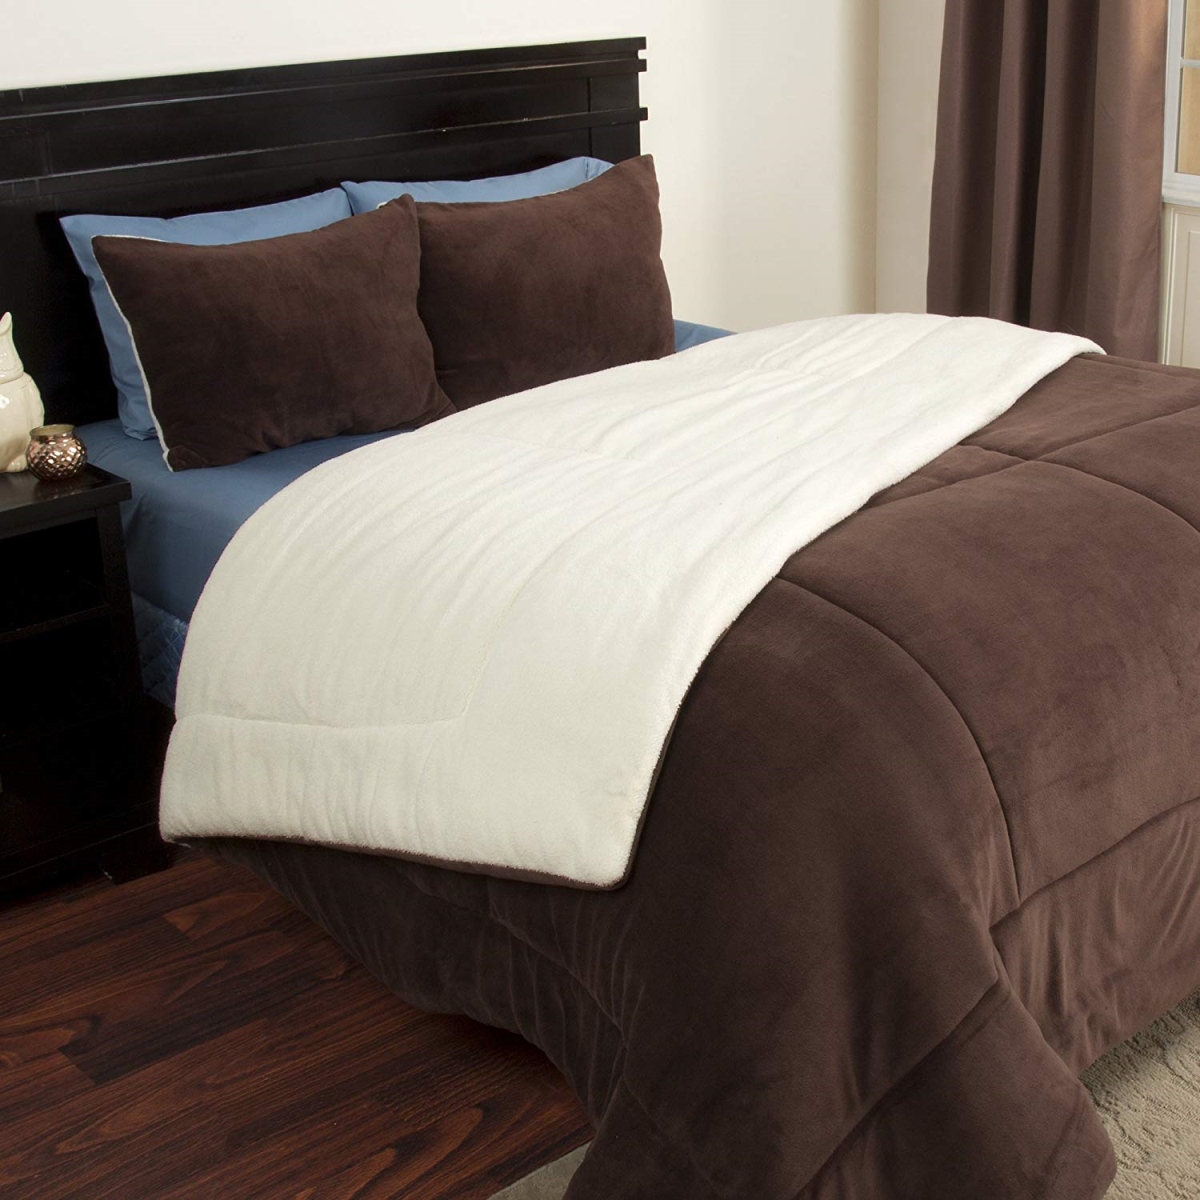 66a-27421 3 Piece Sherpa & Fleece Comforter Set, King Size - Chocolate